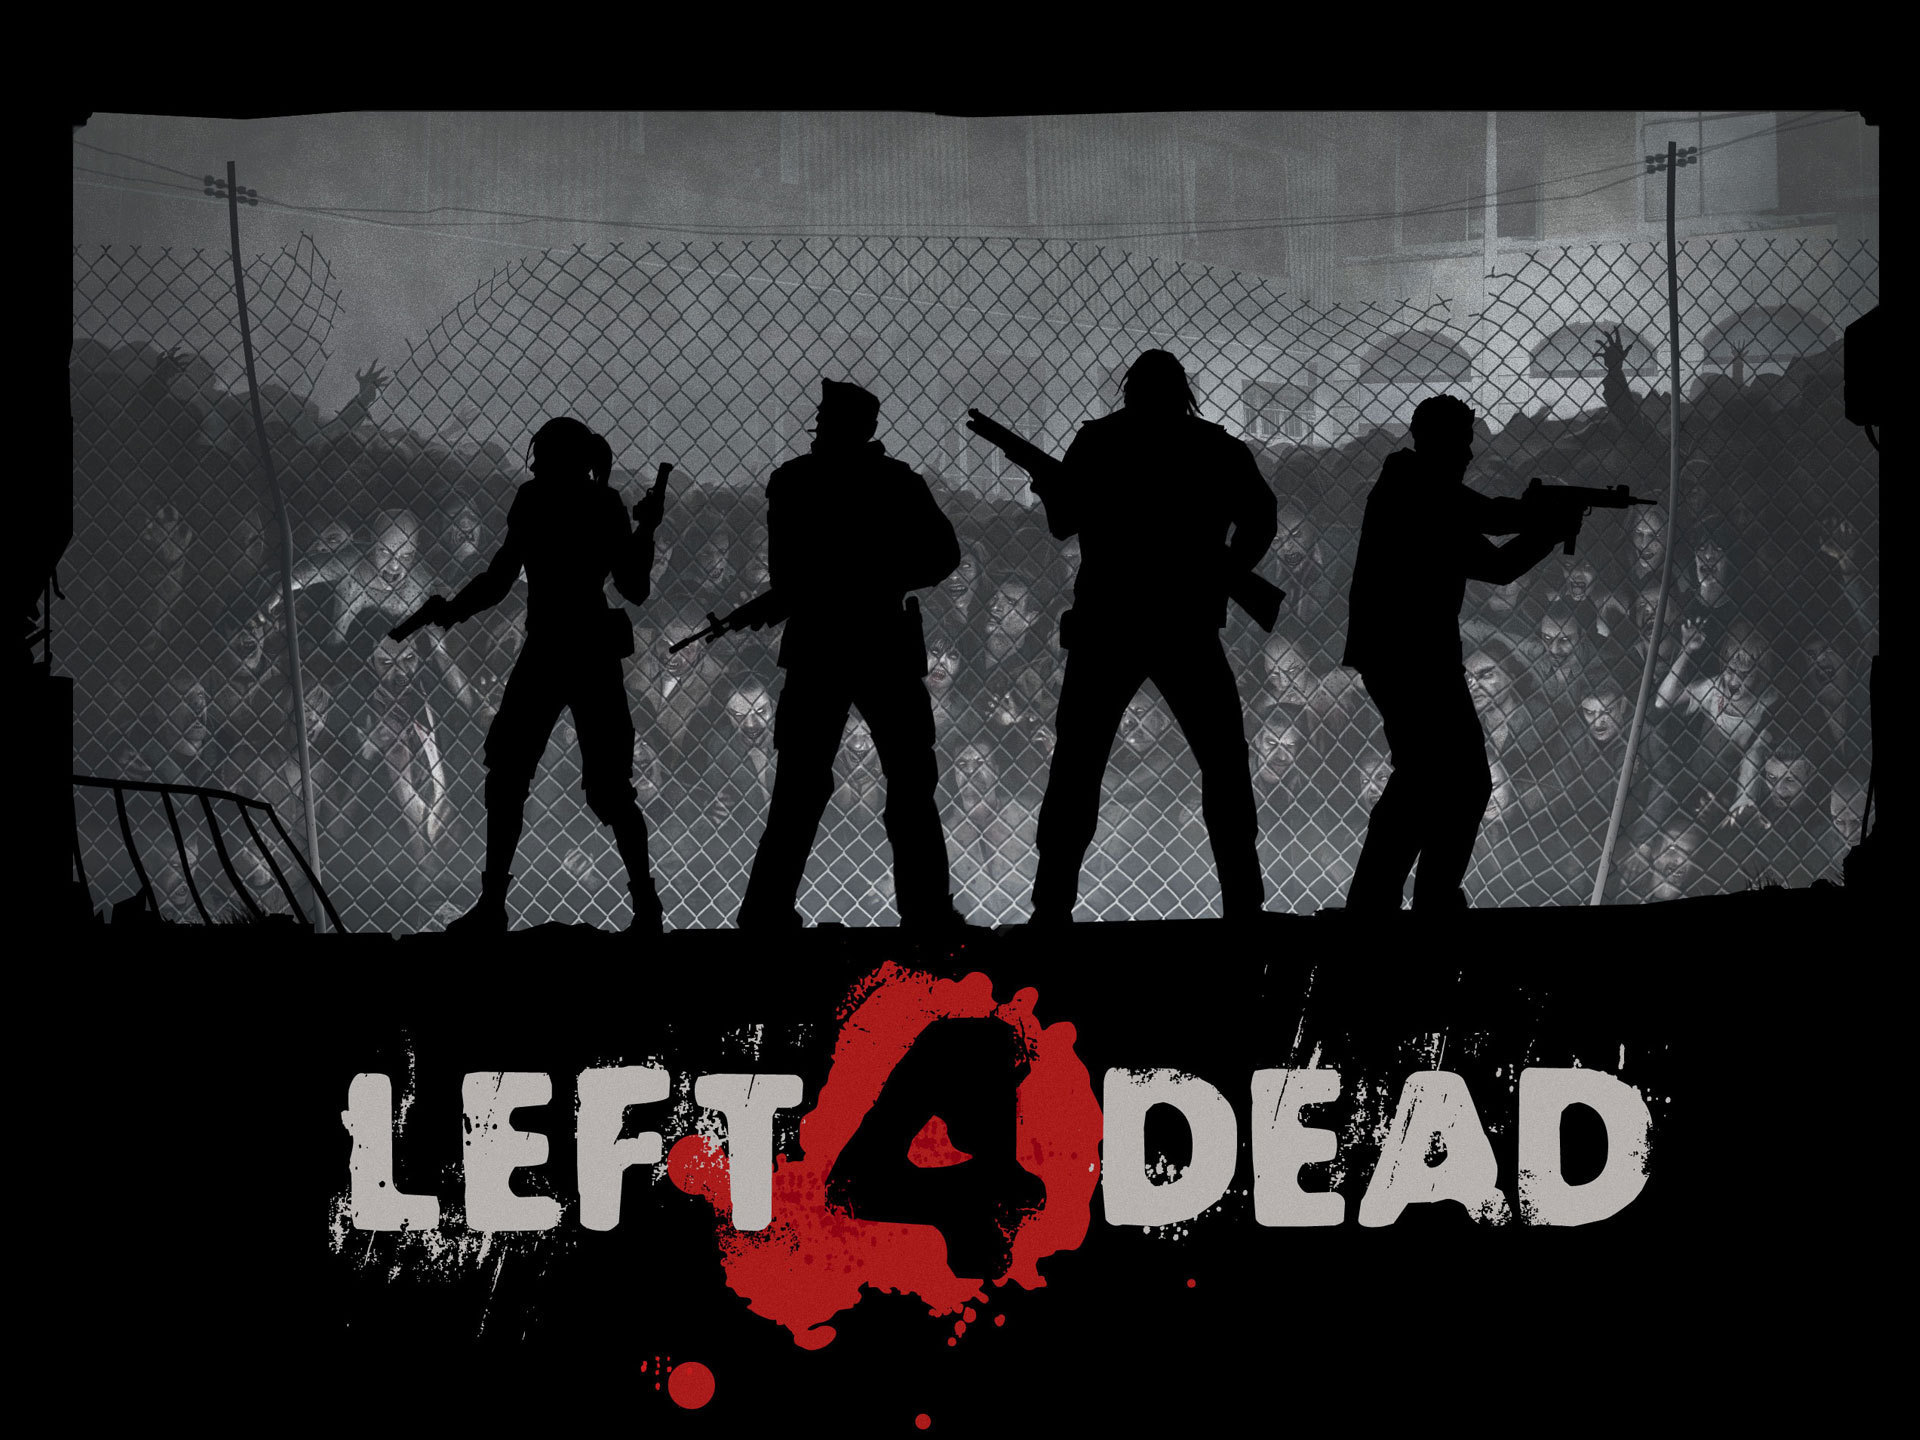 Baixar papel de parede para celular de Left 4 Dead, Videogame gratuito.